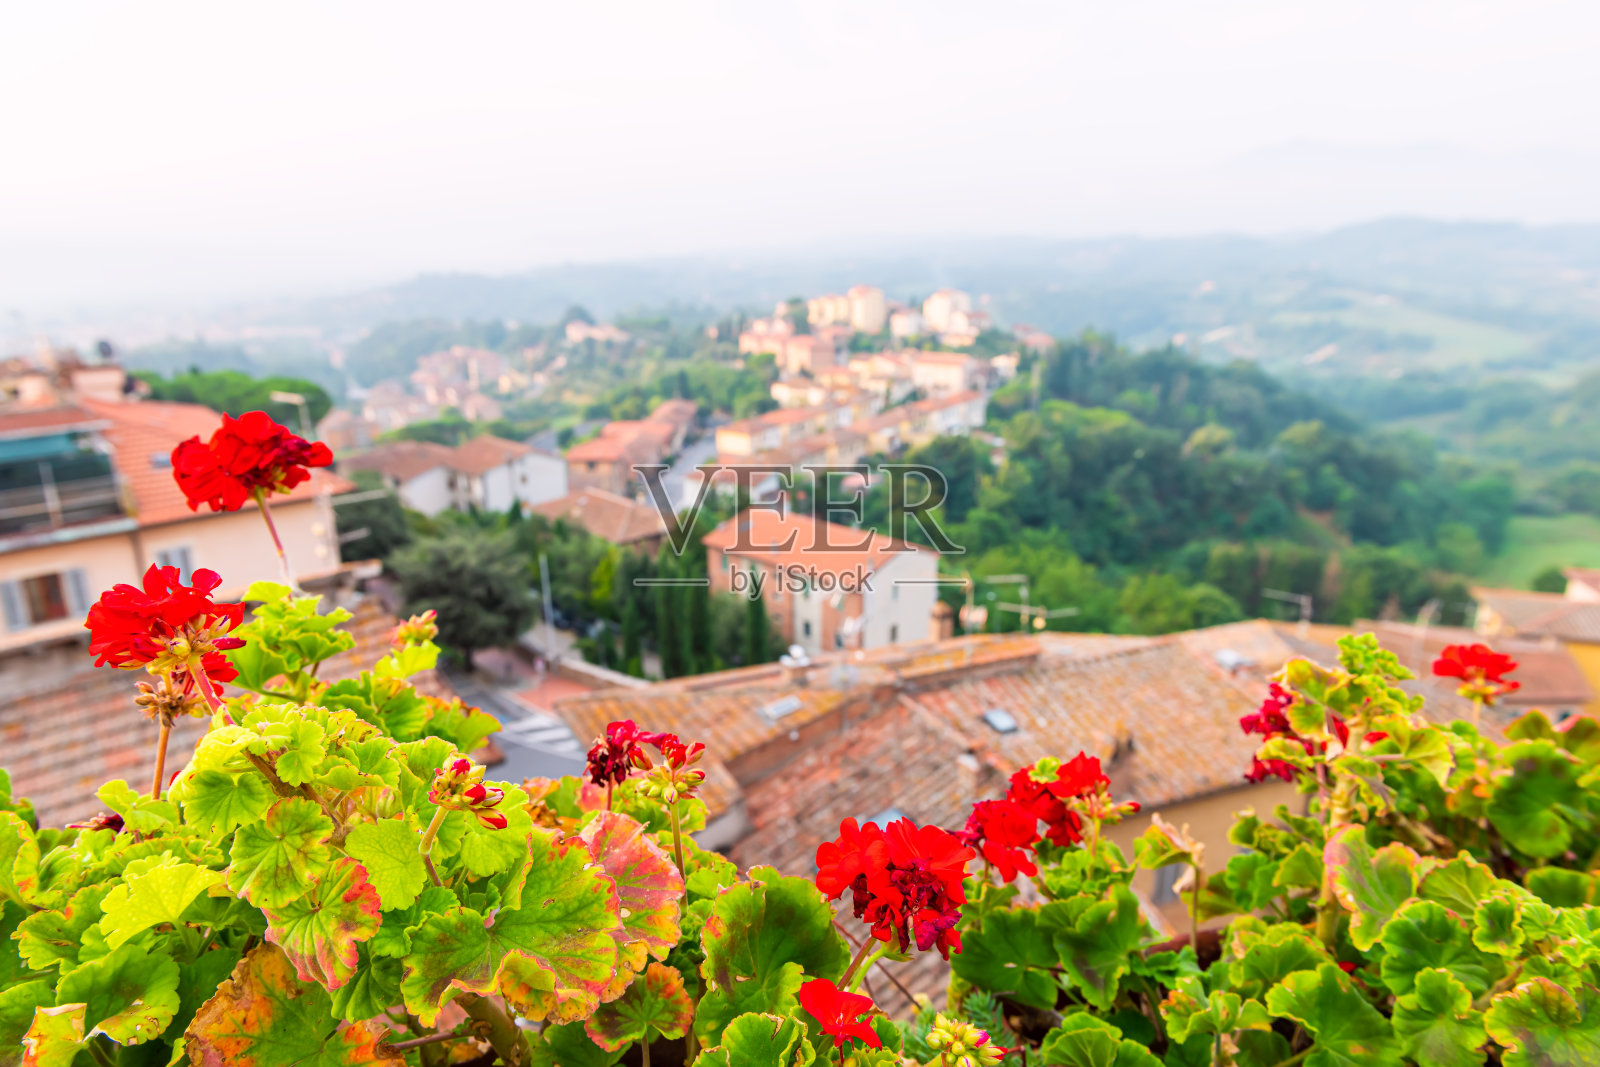 Chiusi Scalo房屋在托斯卡纳，意大利城镇城市景观和红色天竺葵花在花园前景的建筑露台景观视图照片摄影图片